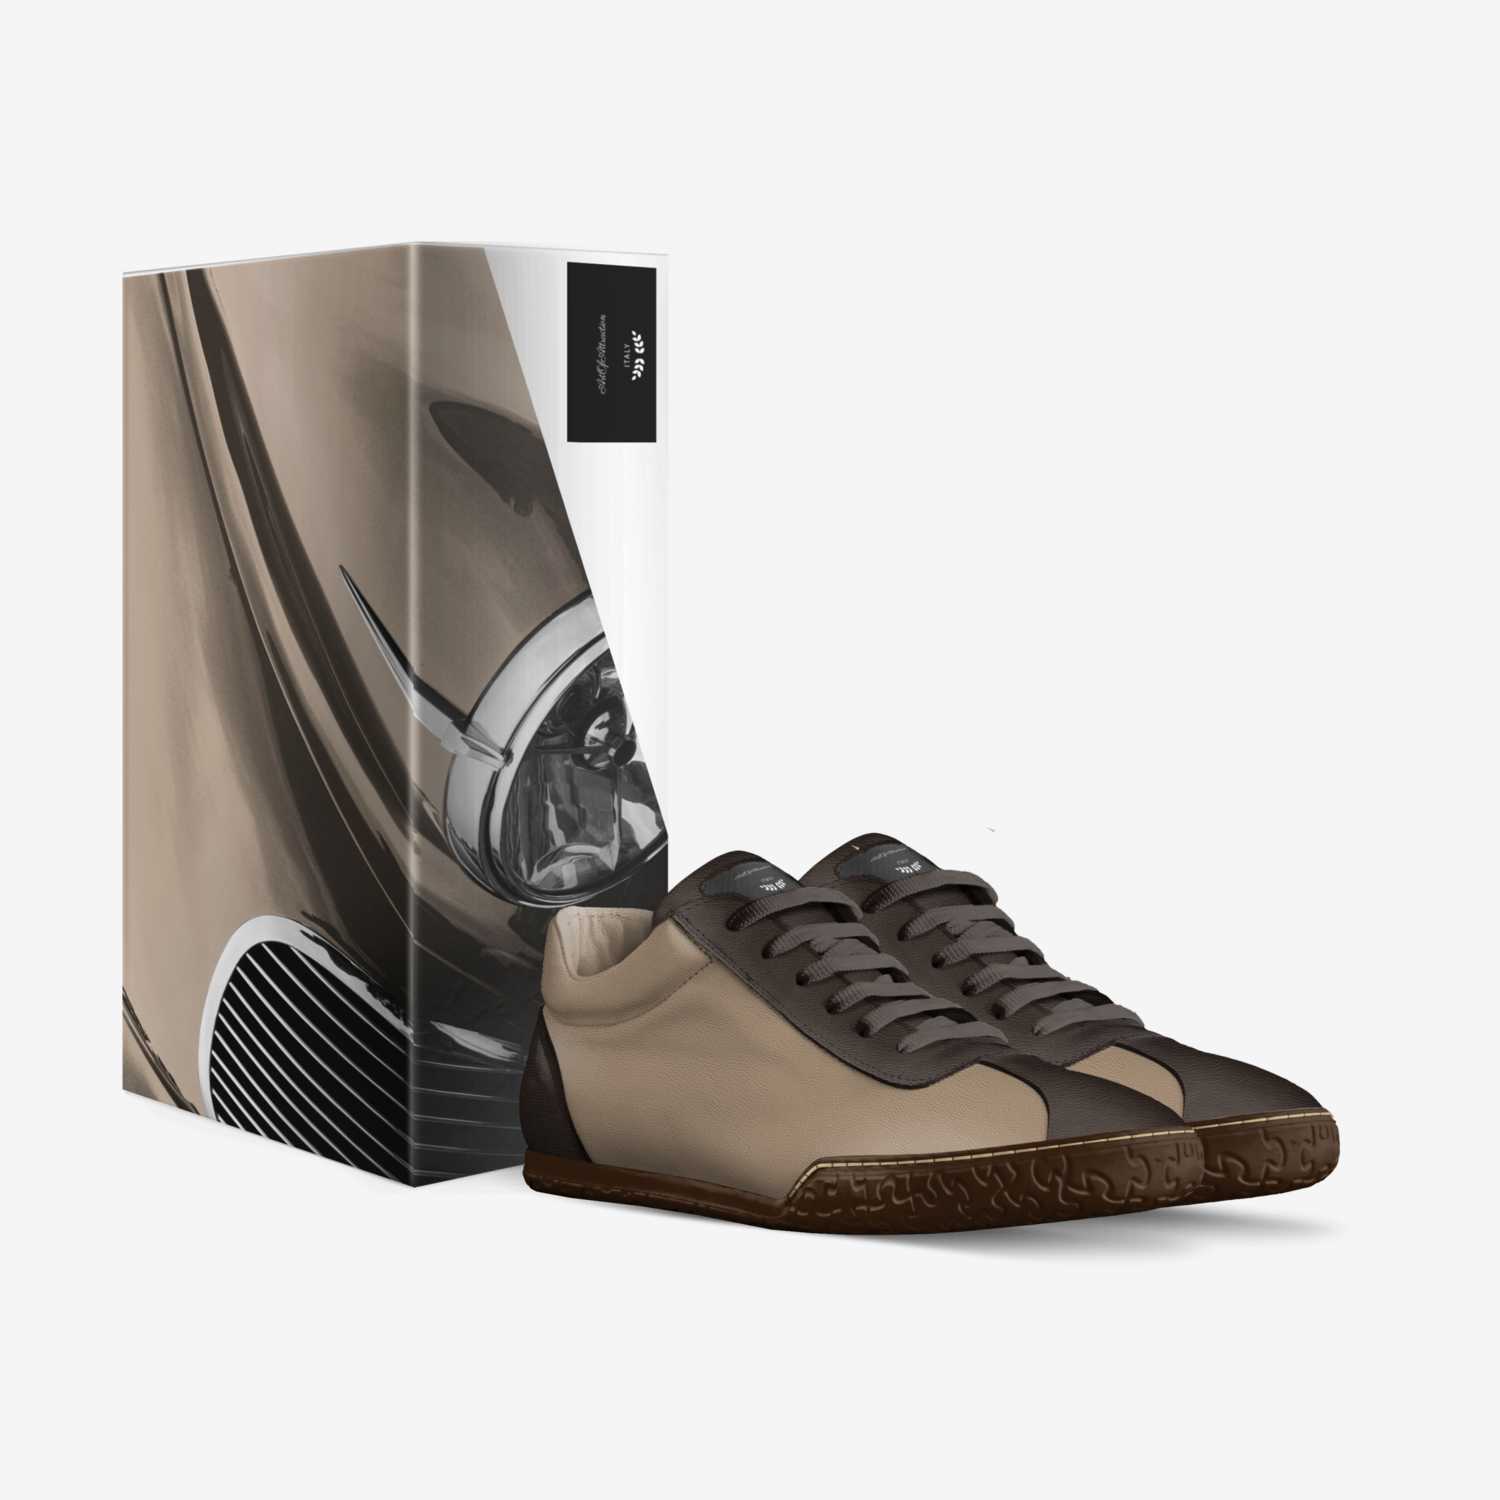 ArtOfAtrraction custom made in Italy shoes by Mervyn Riley | Box view